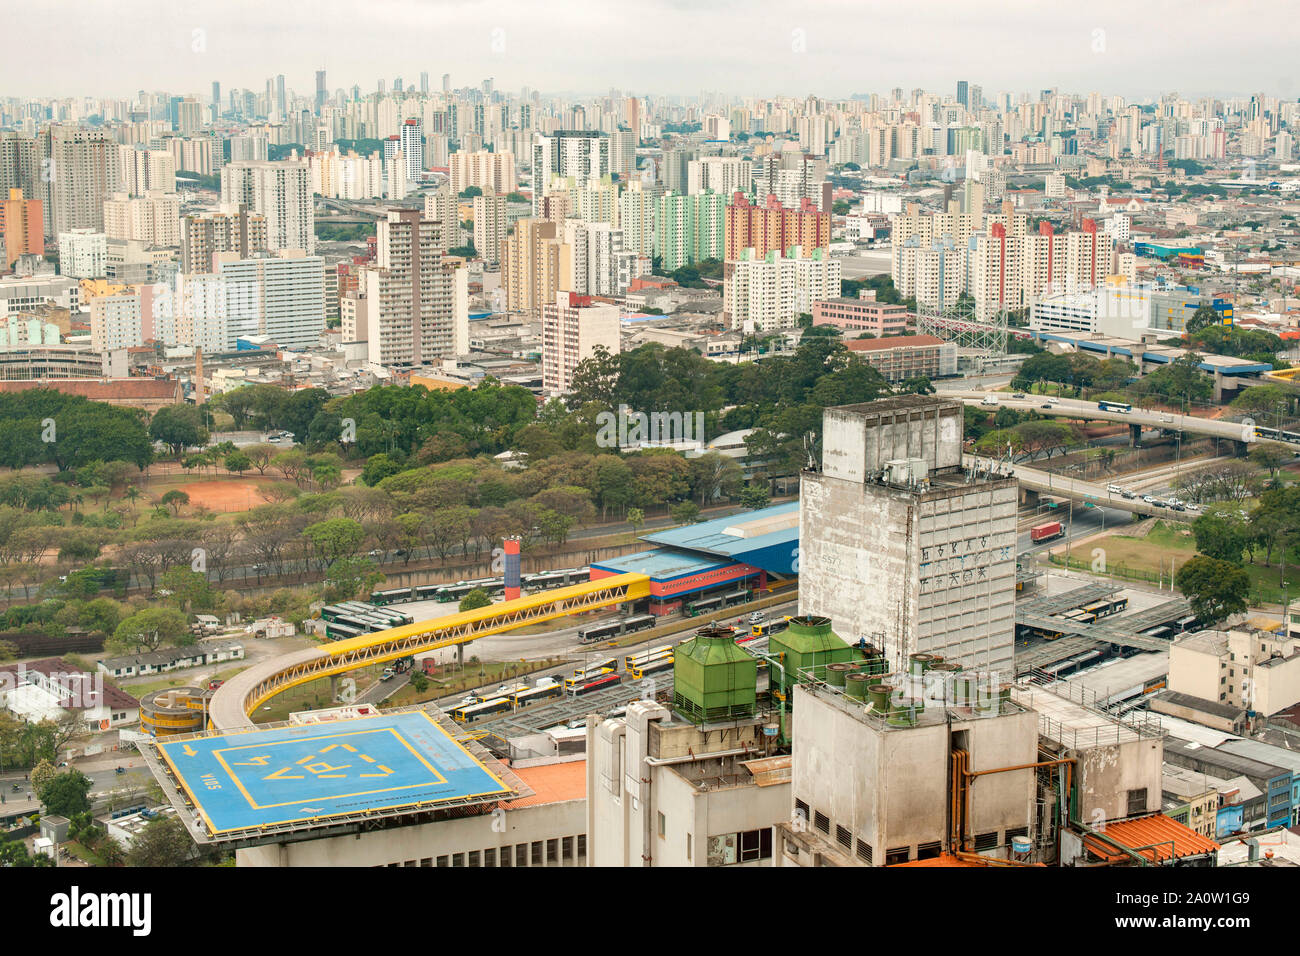 São Paulo vu de la terrasse d'observation de la construction de Santander Farol à São Paulo, Brésil. Banque D'Images